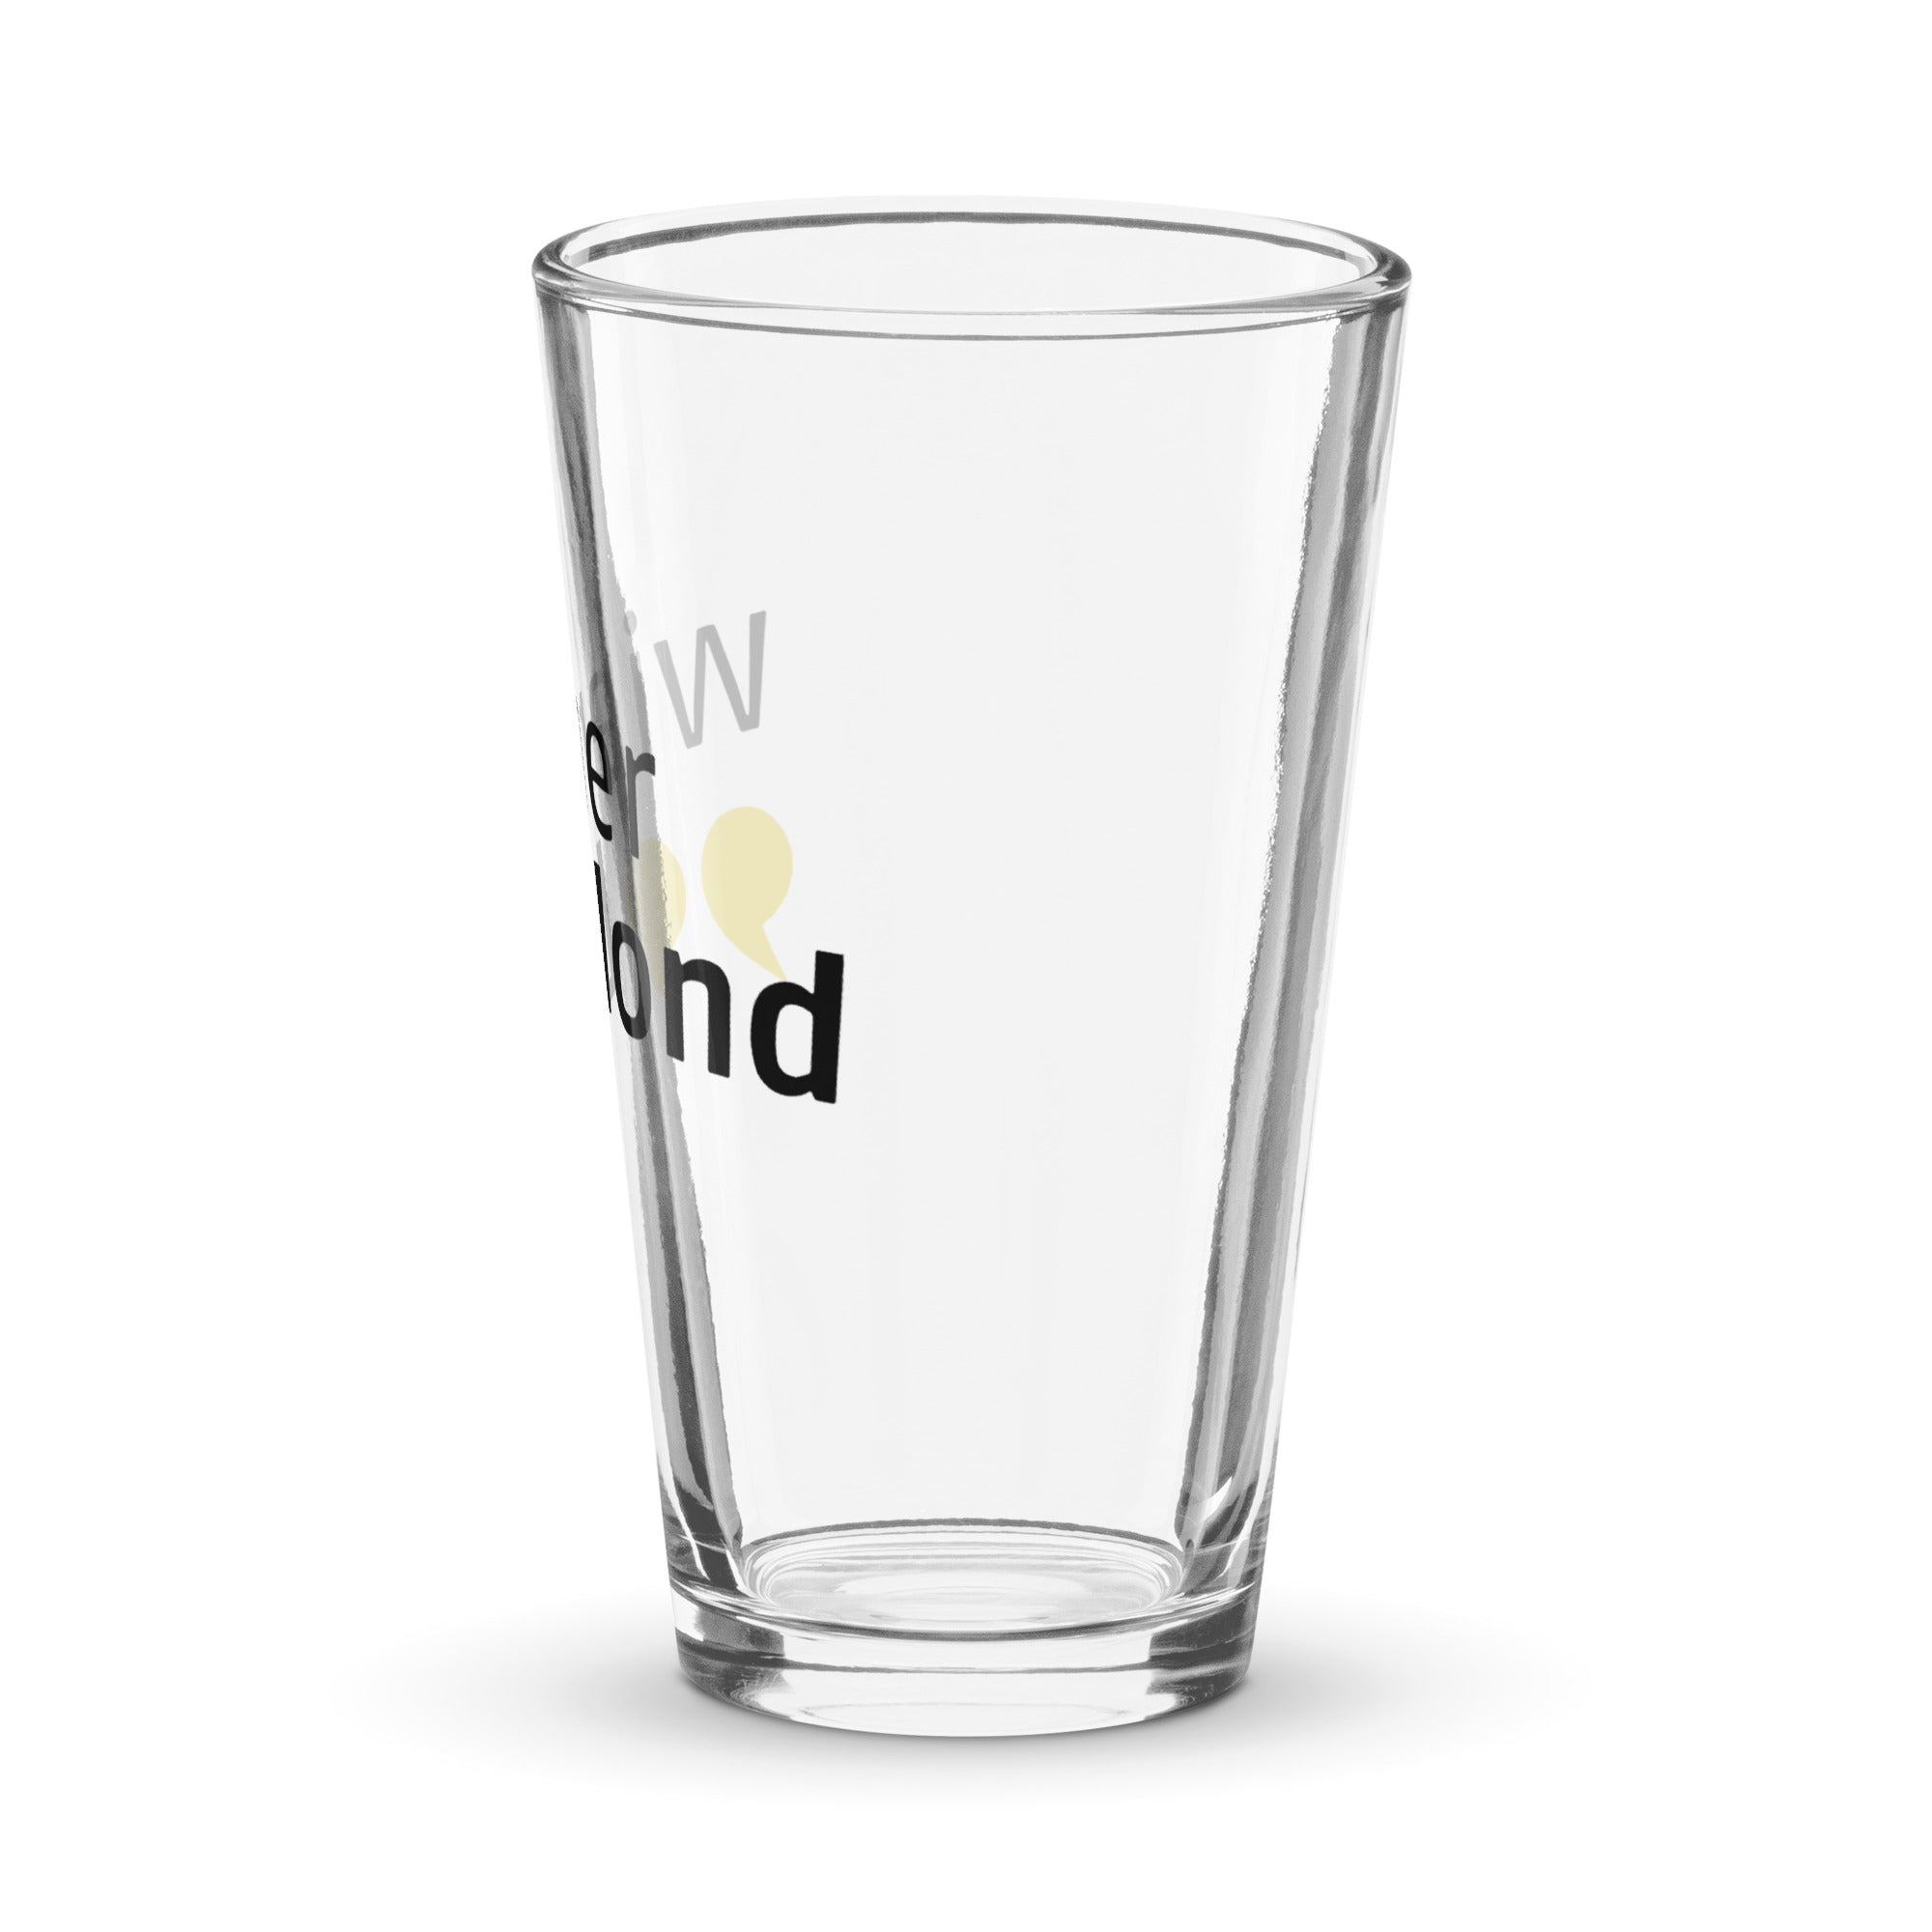 Wiener Blond, „Band Logo Merch", Pint-Glas (473ml)